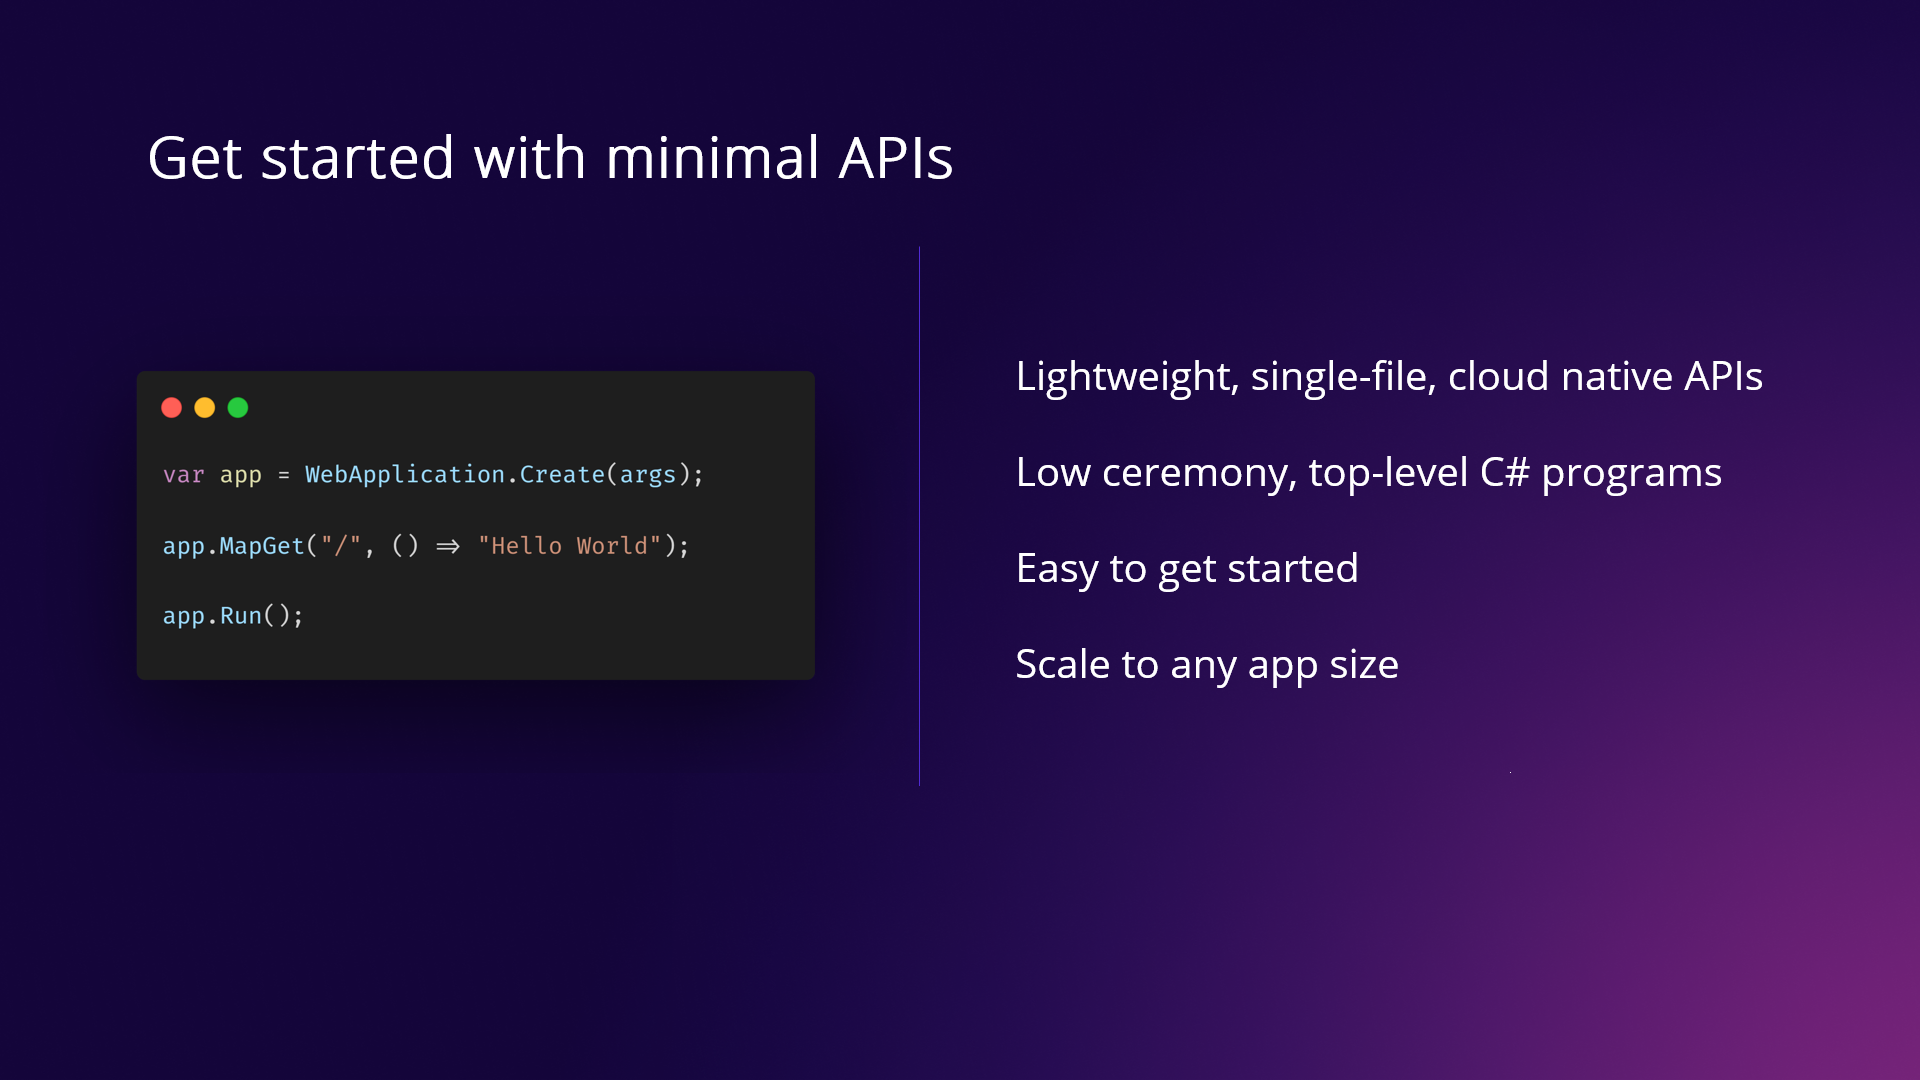 Minimal APIs